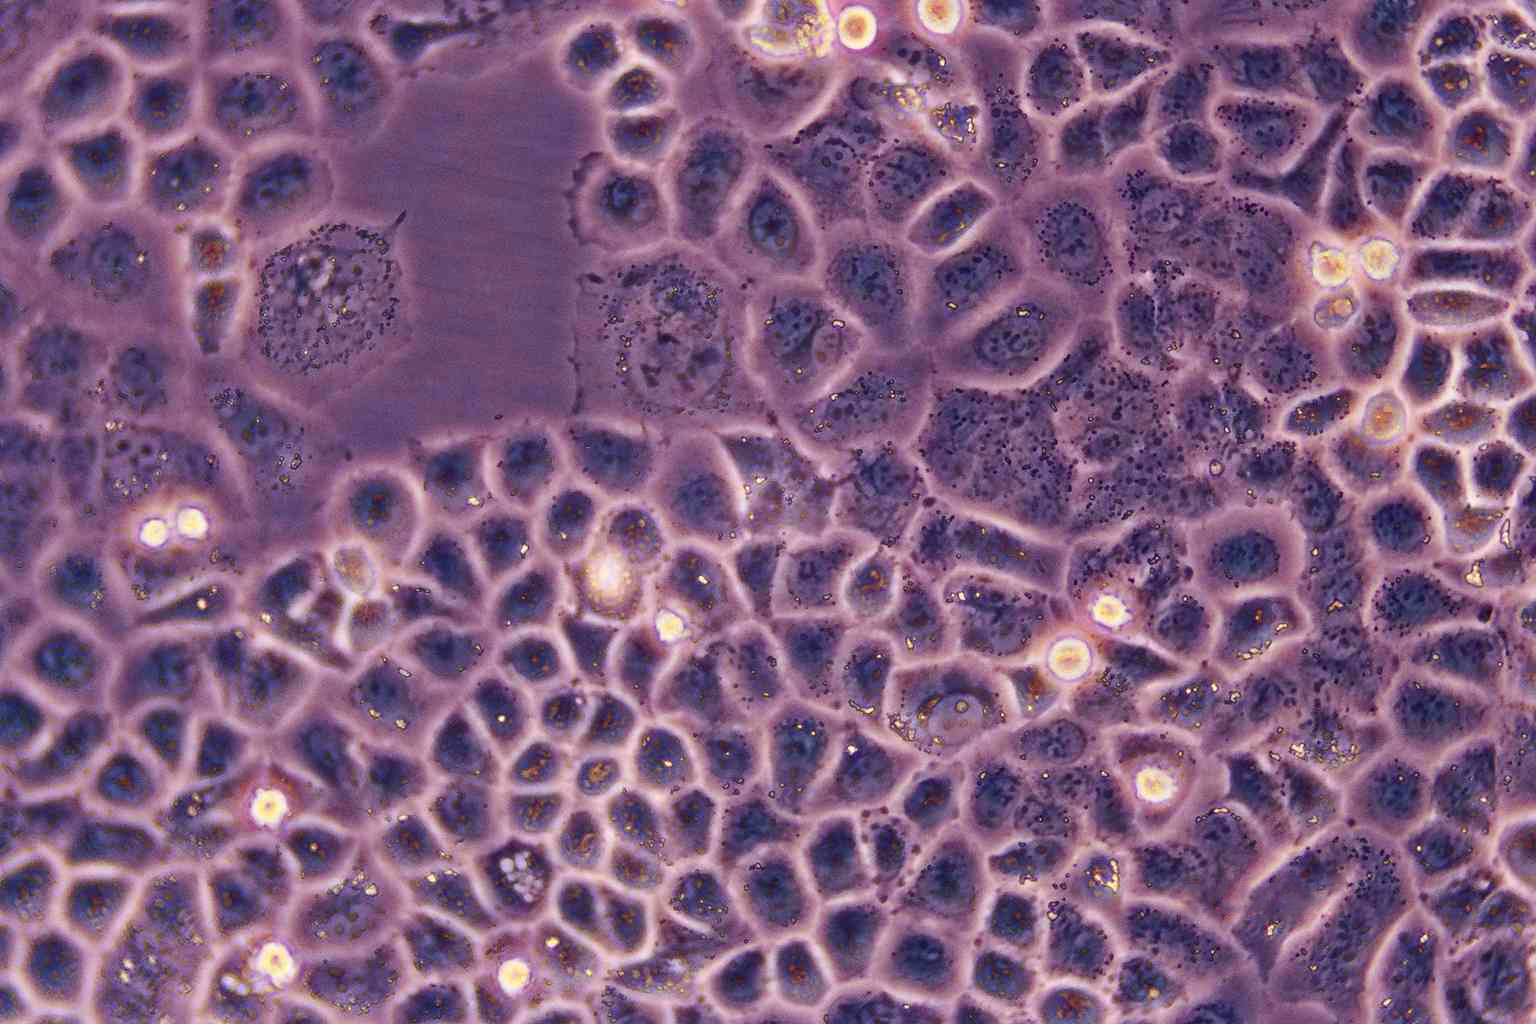 IM95 epithelioid cells人胃癌细胞系